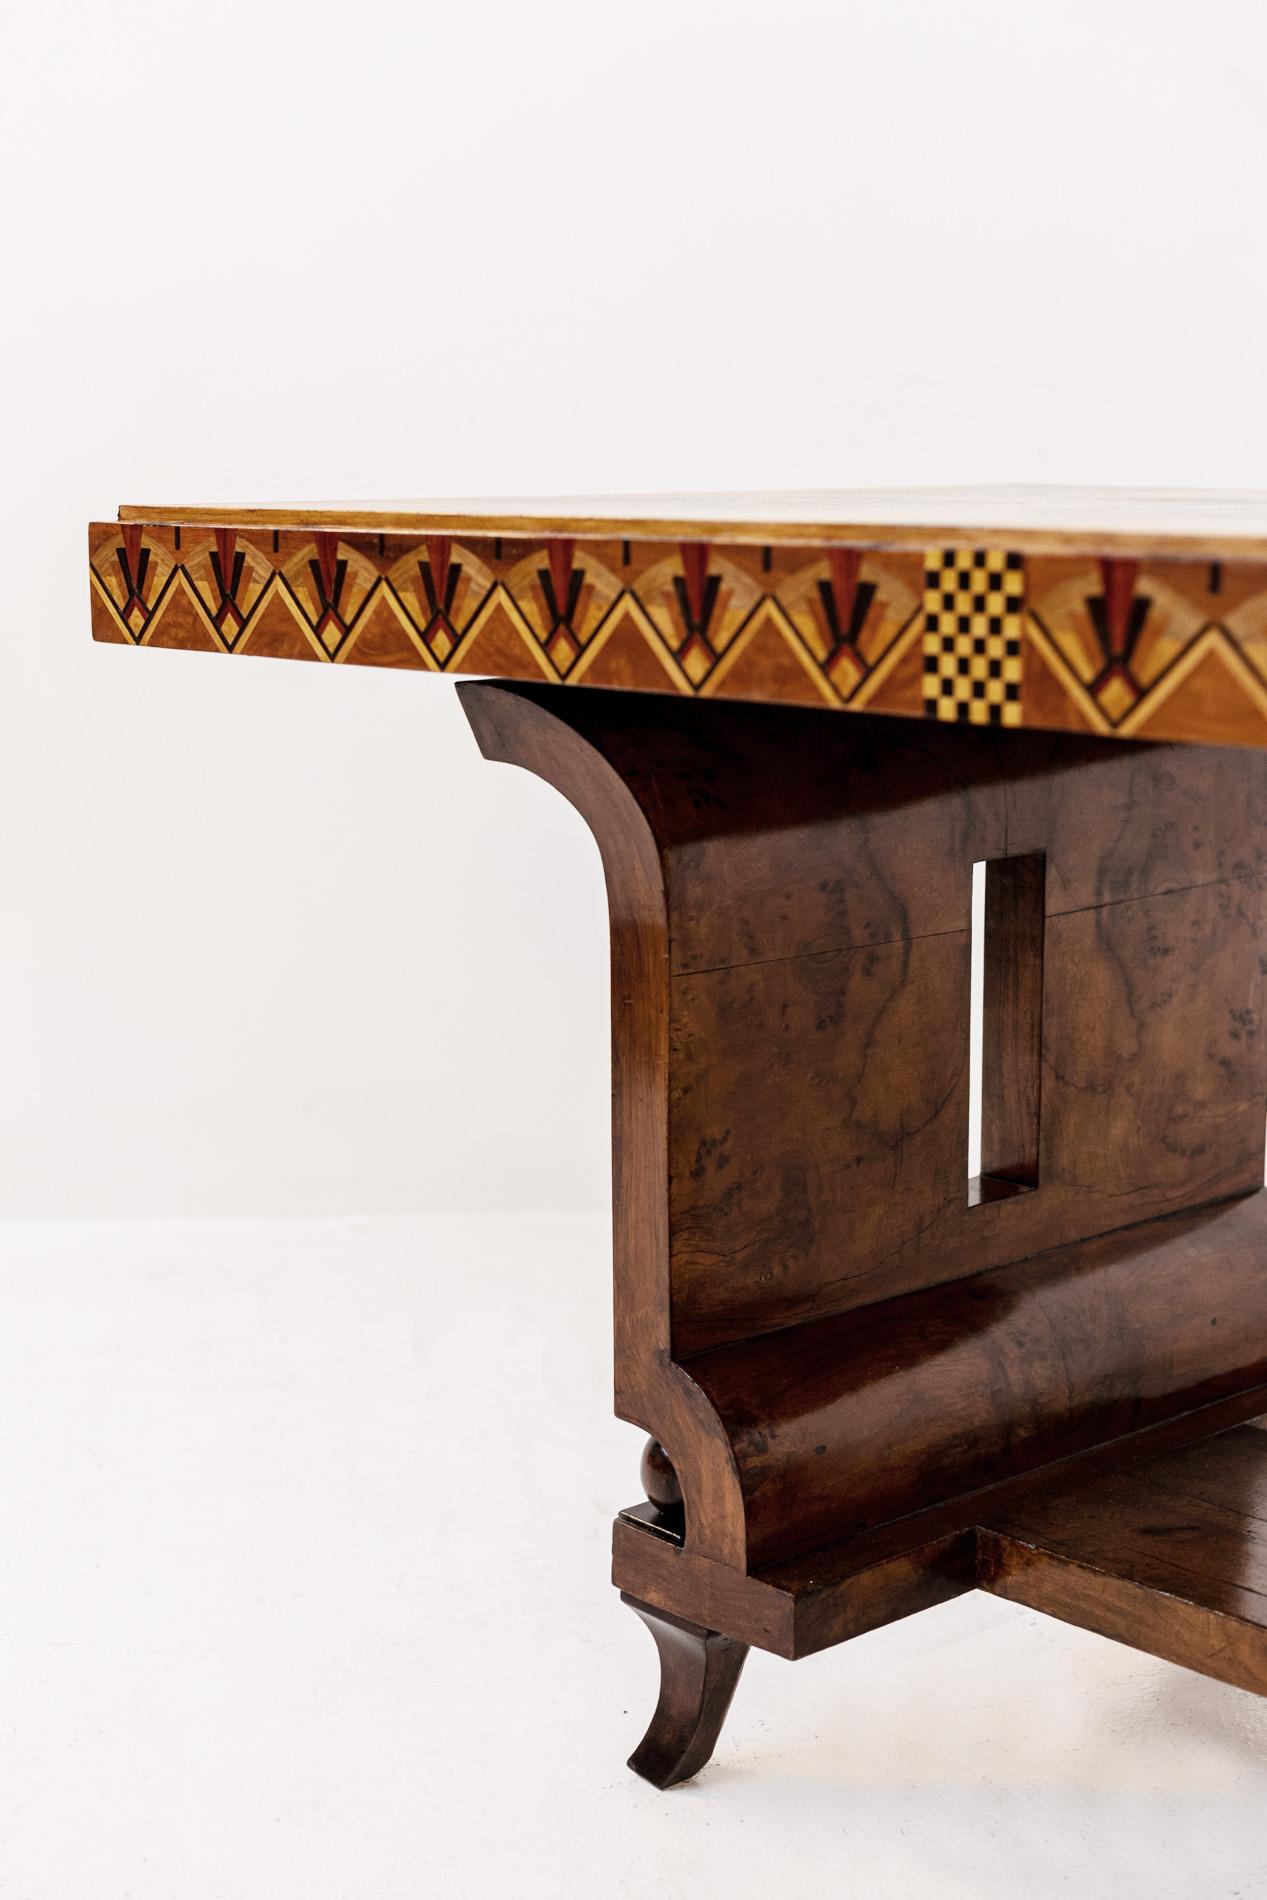 Contemporary Italian Futurist Table Mauro Varotti in Various Wood Essences